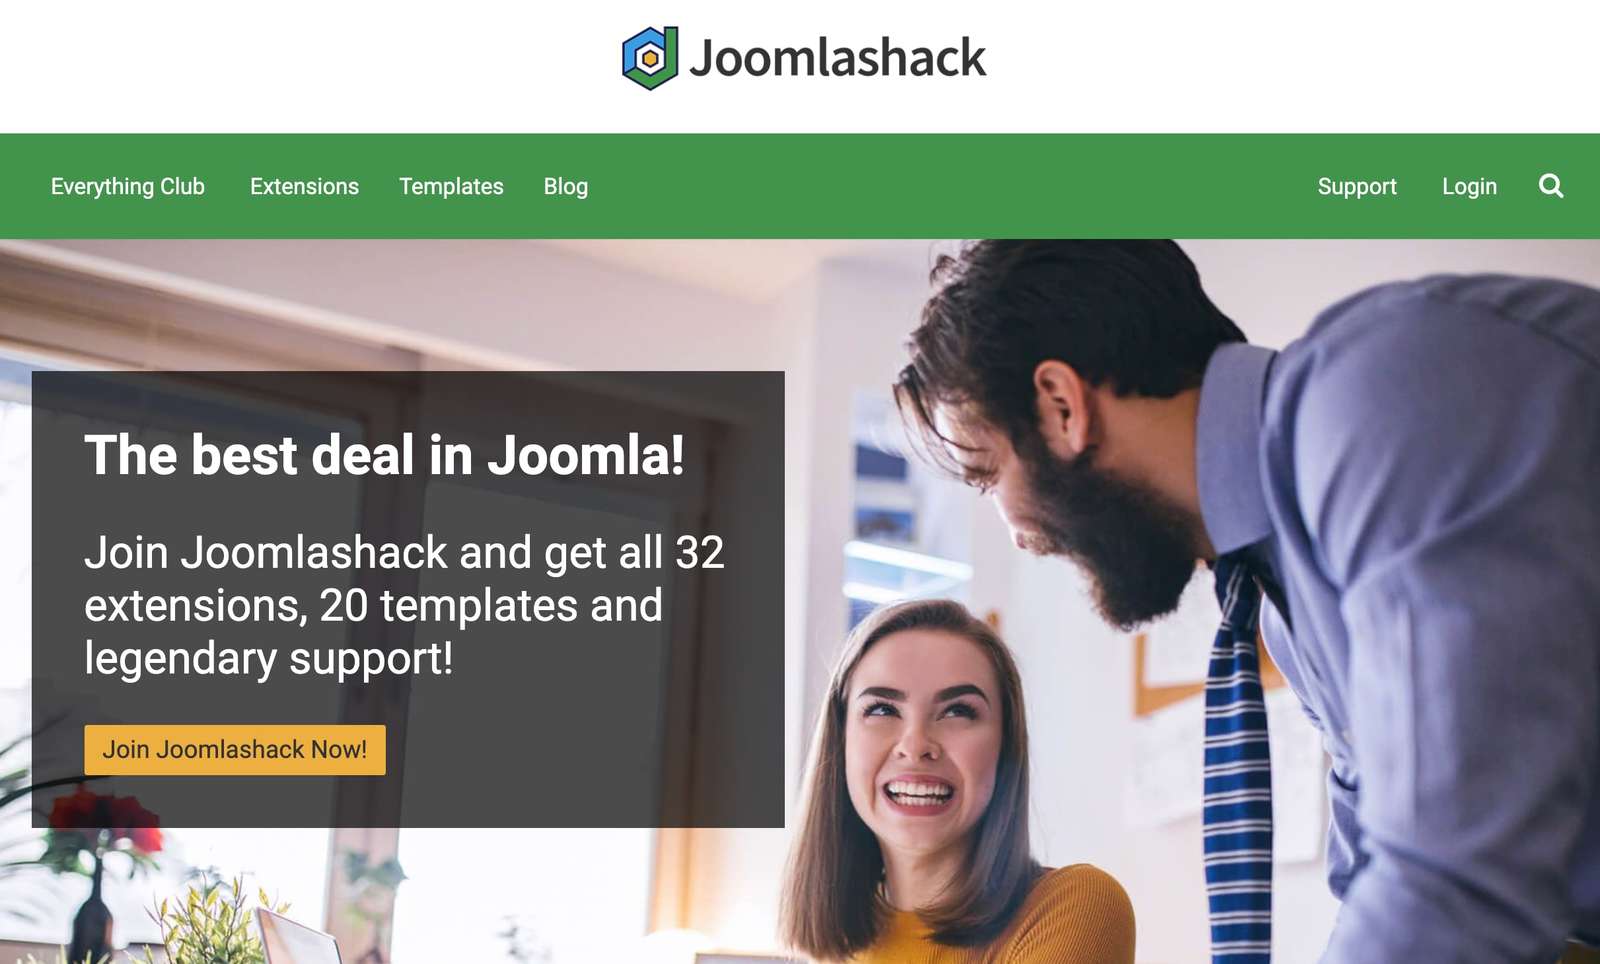 (c) Joomlashack.com